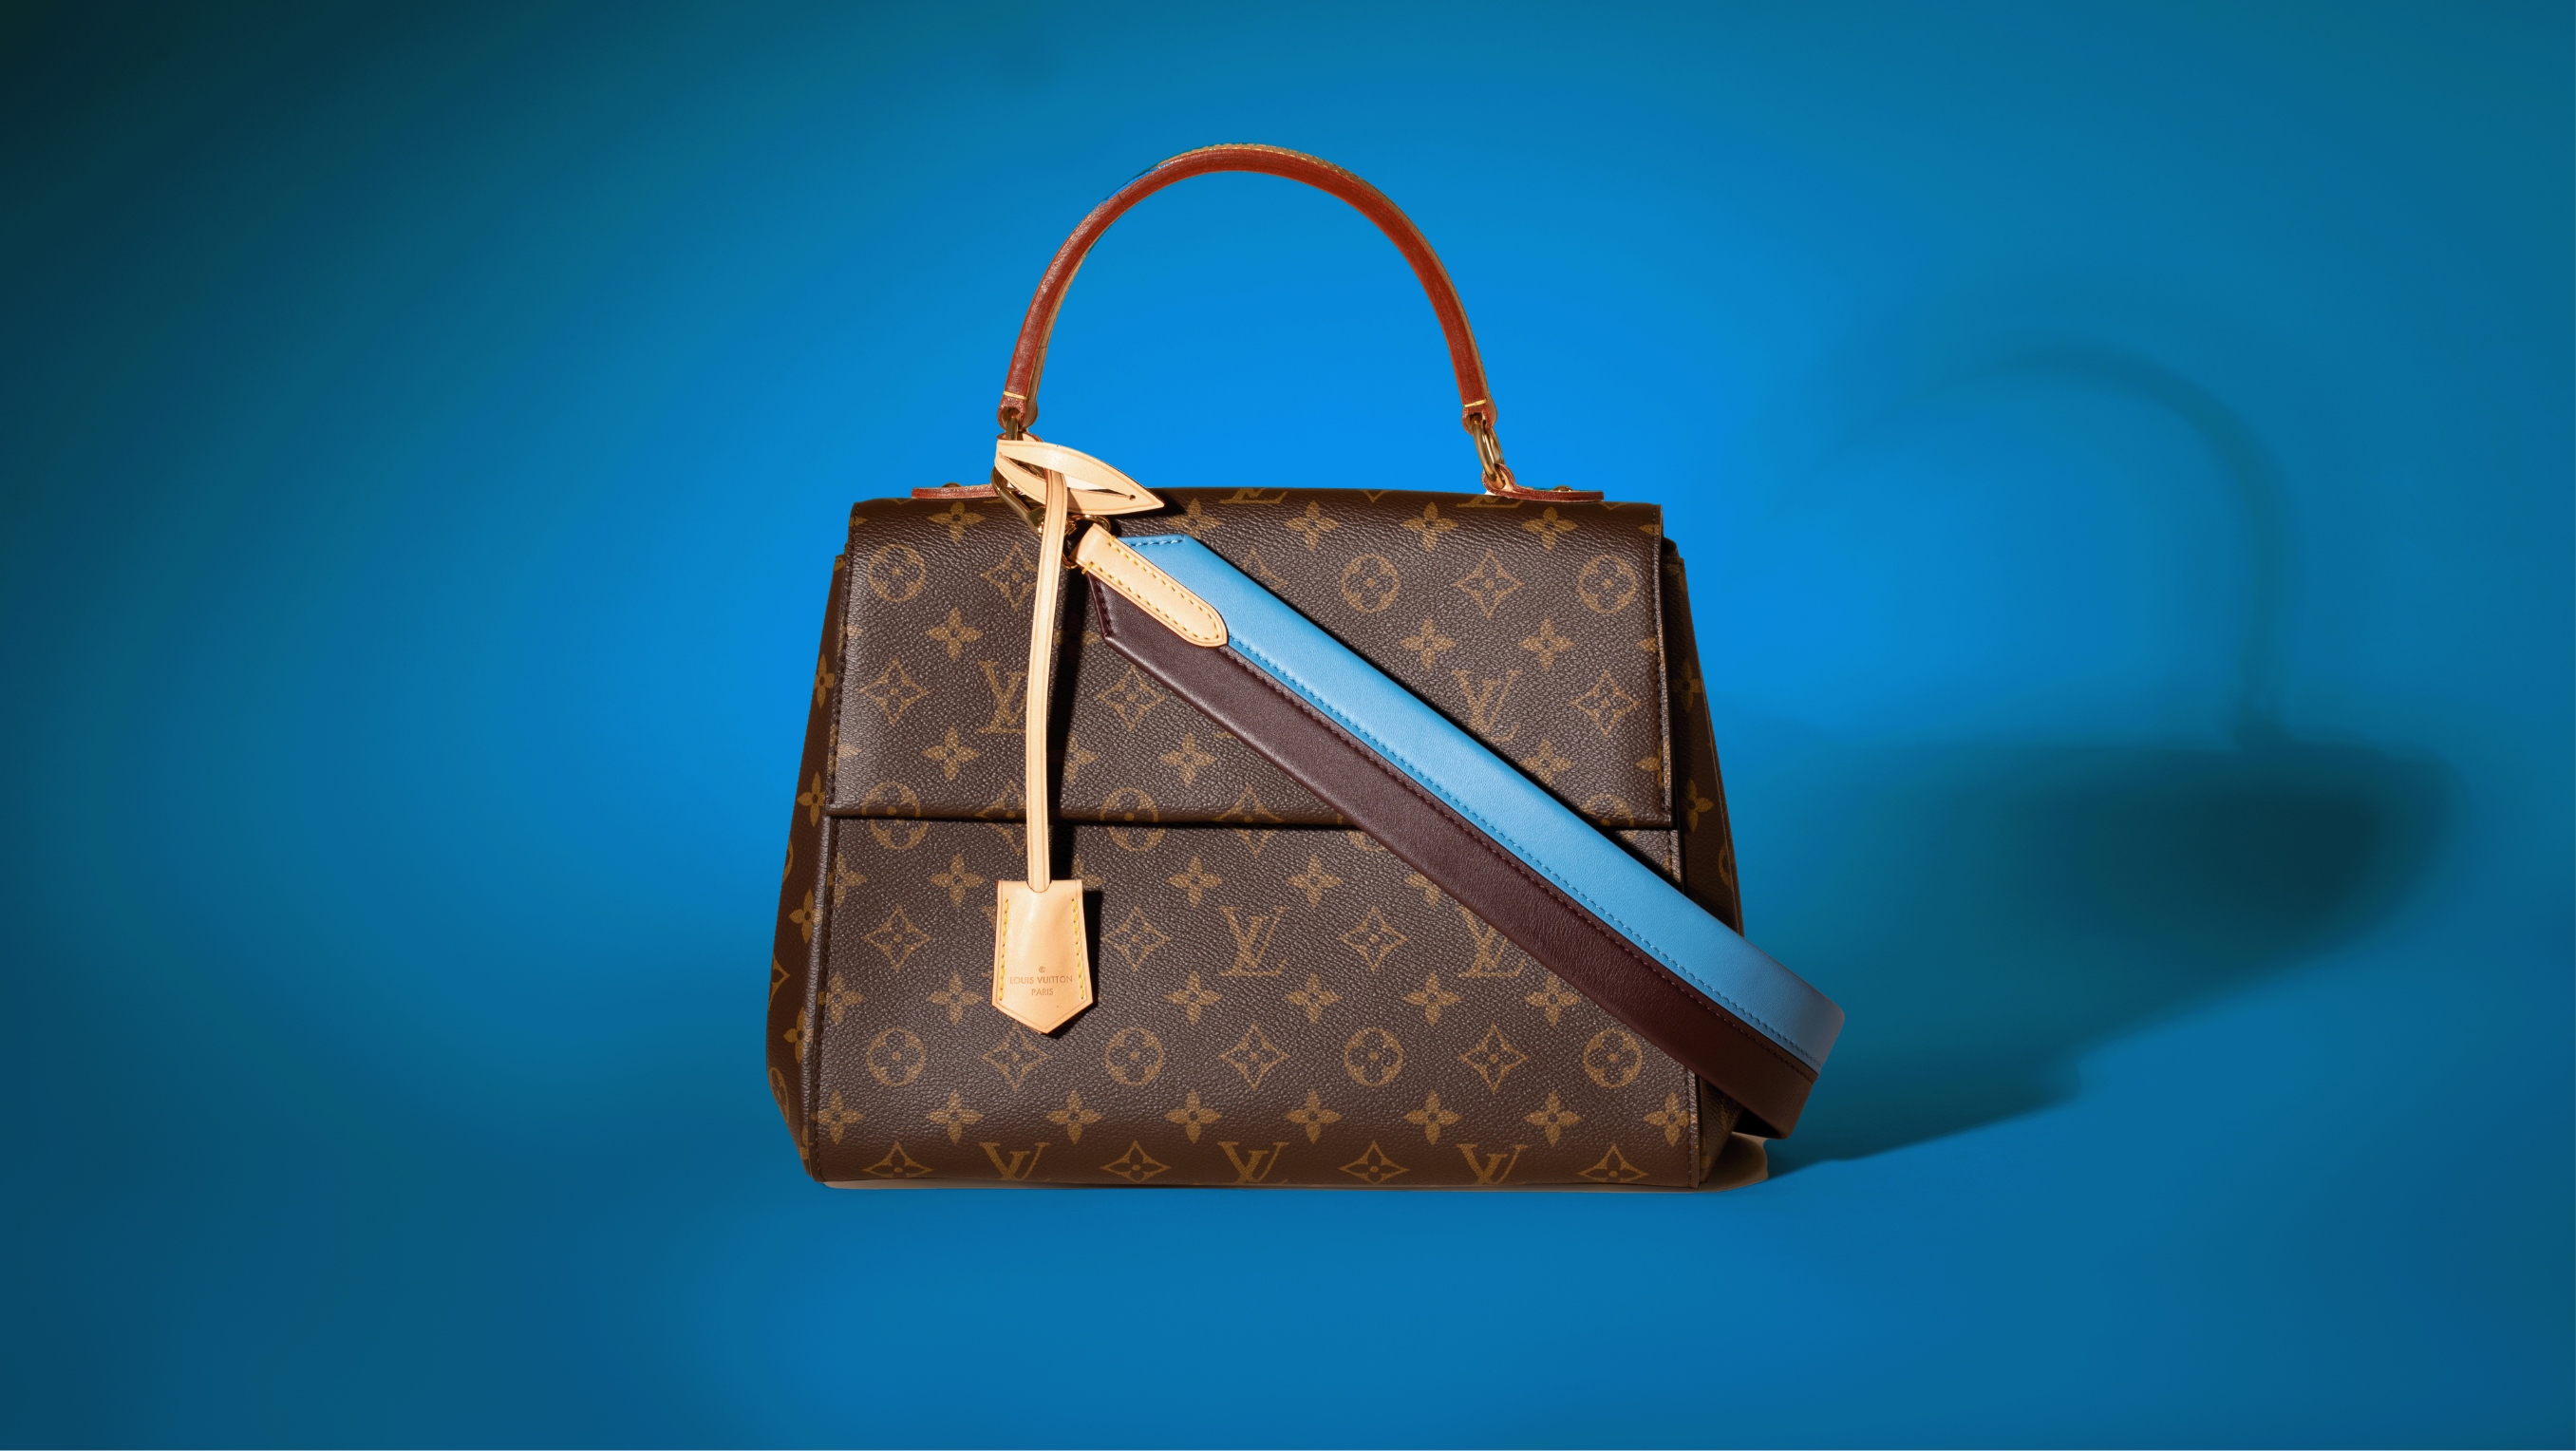 5 मिनट में सिर्फ एक टुकड़े से बनाए/Zipper Handbag/Sling bag/Side Bag/Mobile  Phone Purse/Bag | Bags, Bag making, Purses and handbags